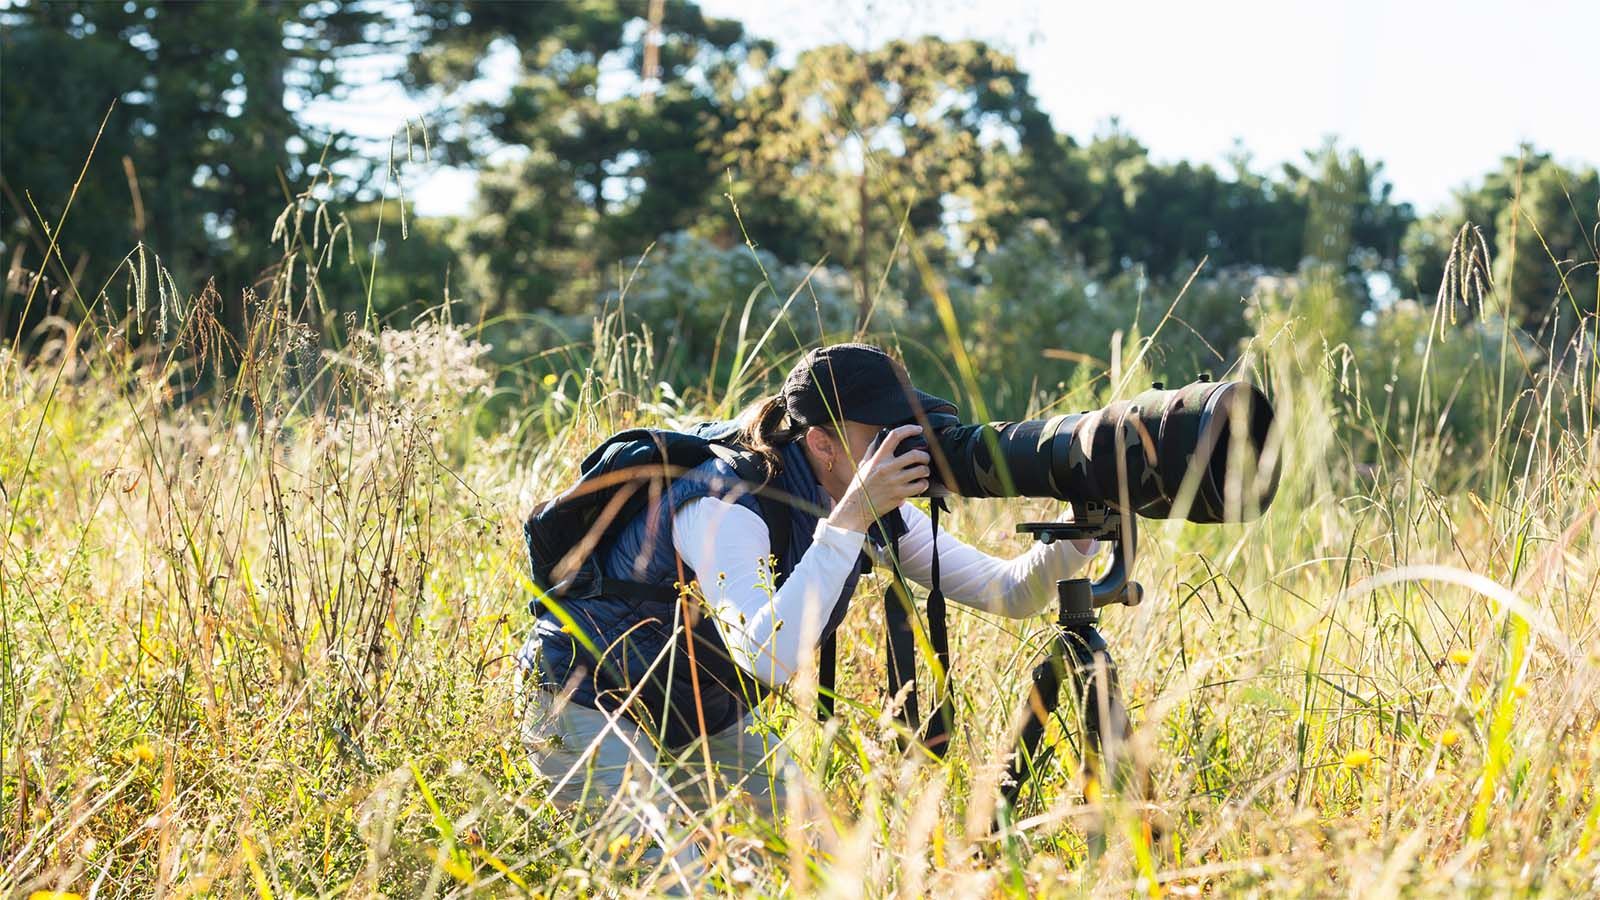 Wildlife enthusiast watching wildlife through large camera